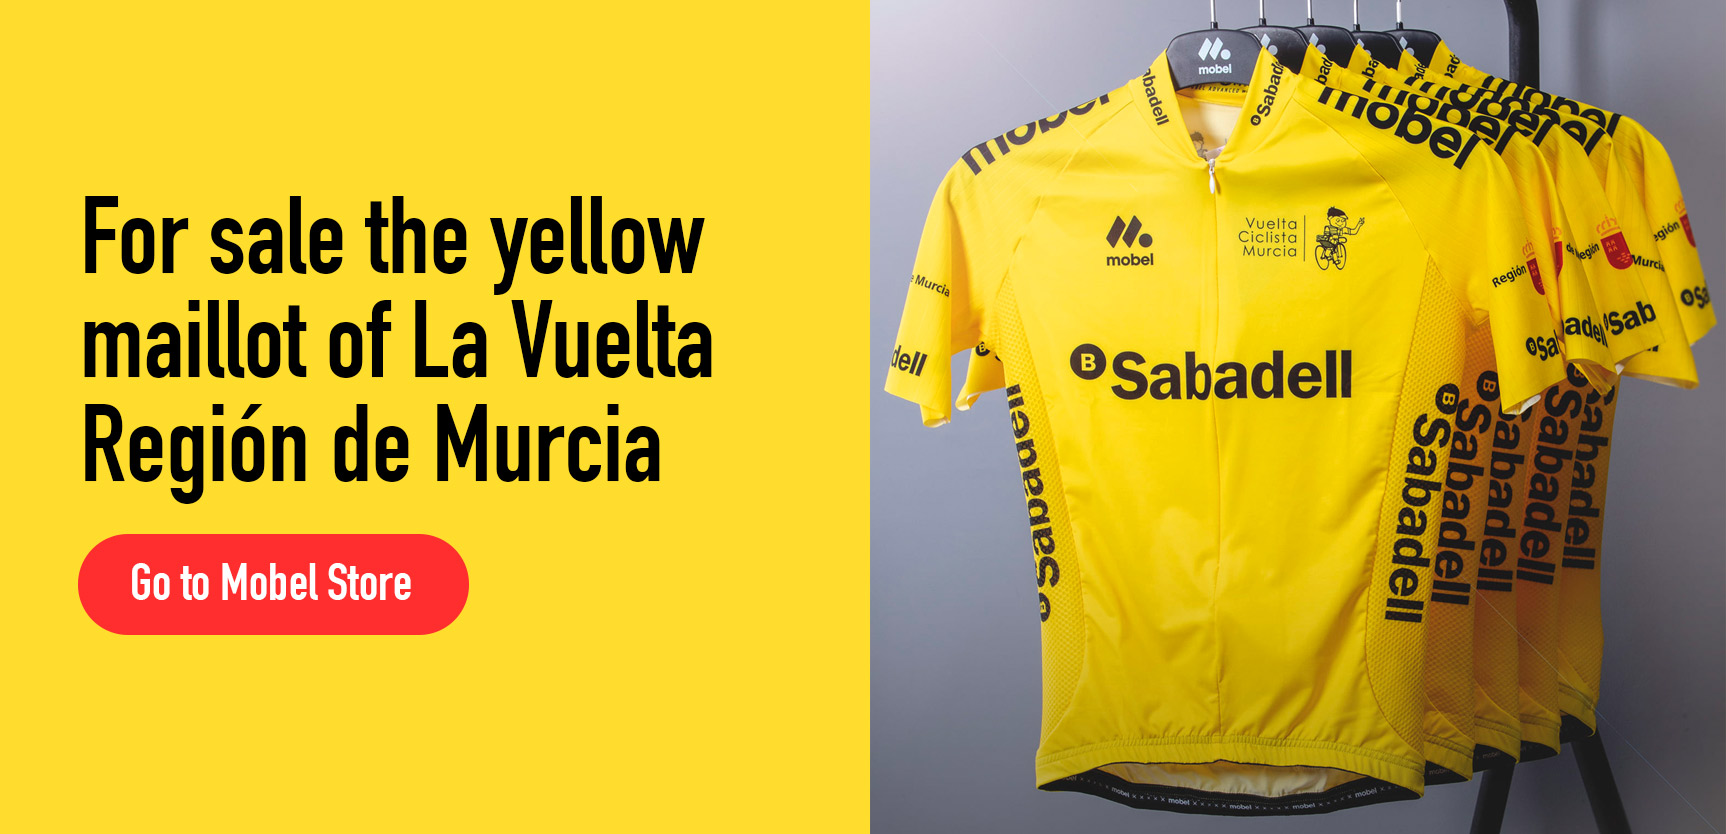 La Vuelta Murcia Yellow Maillot